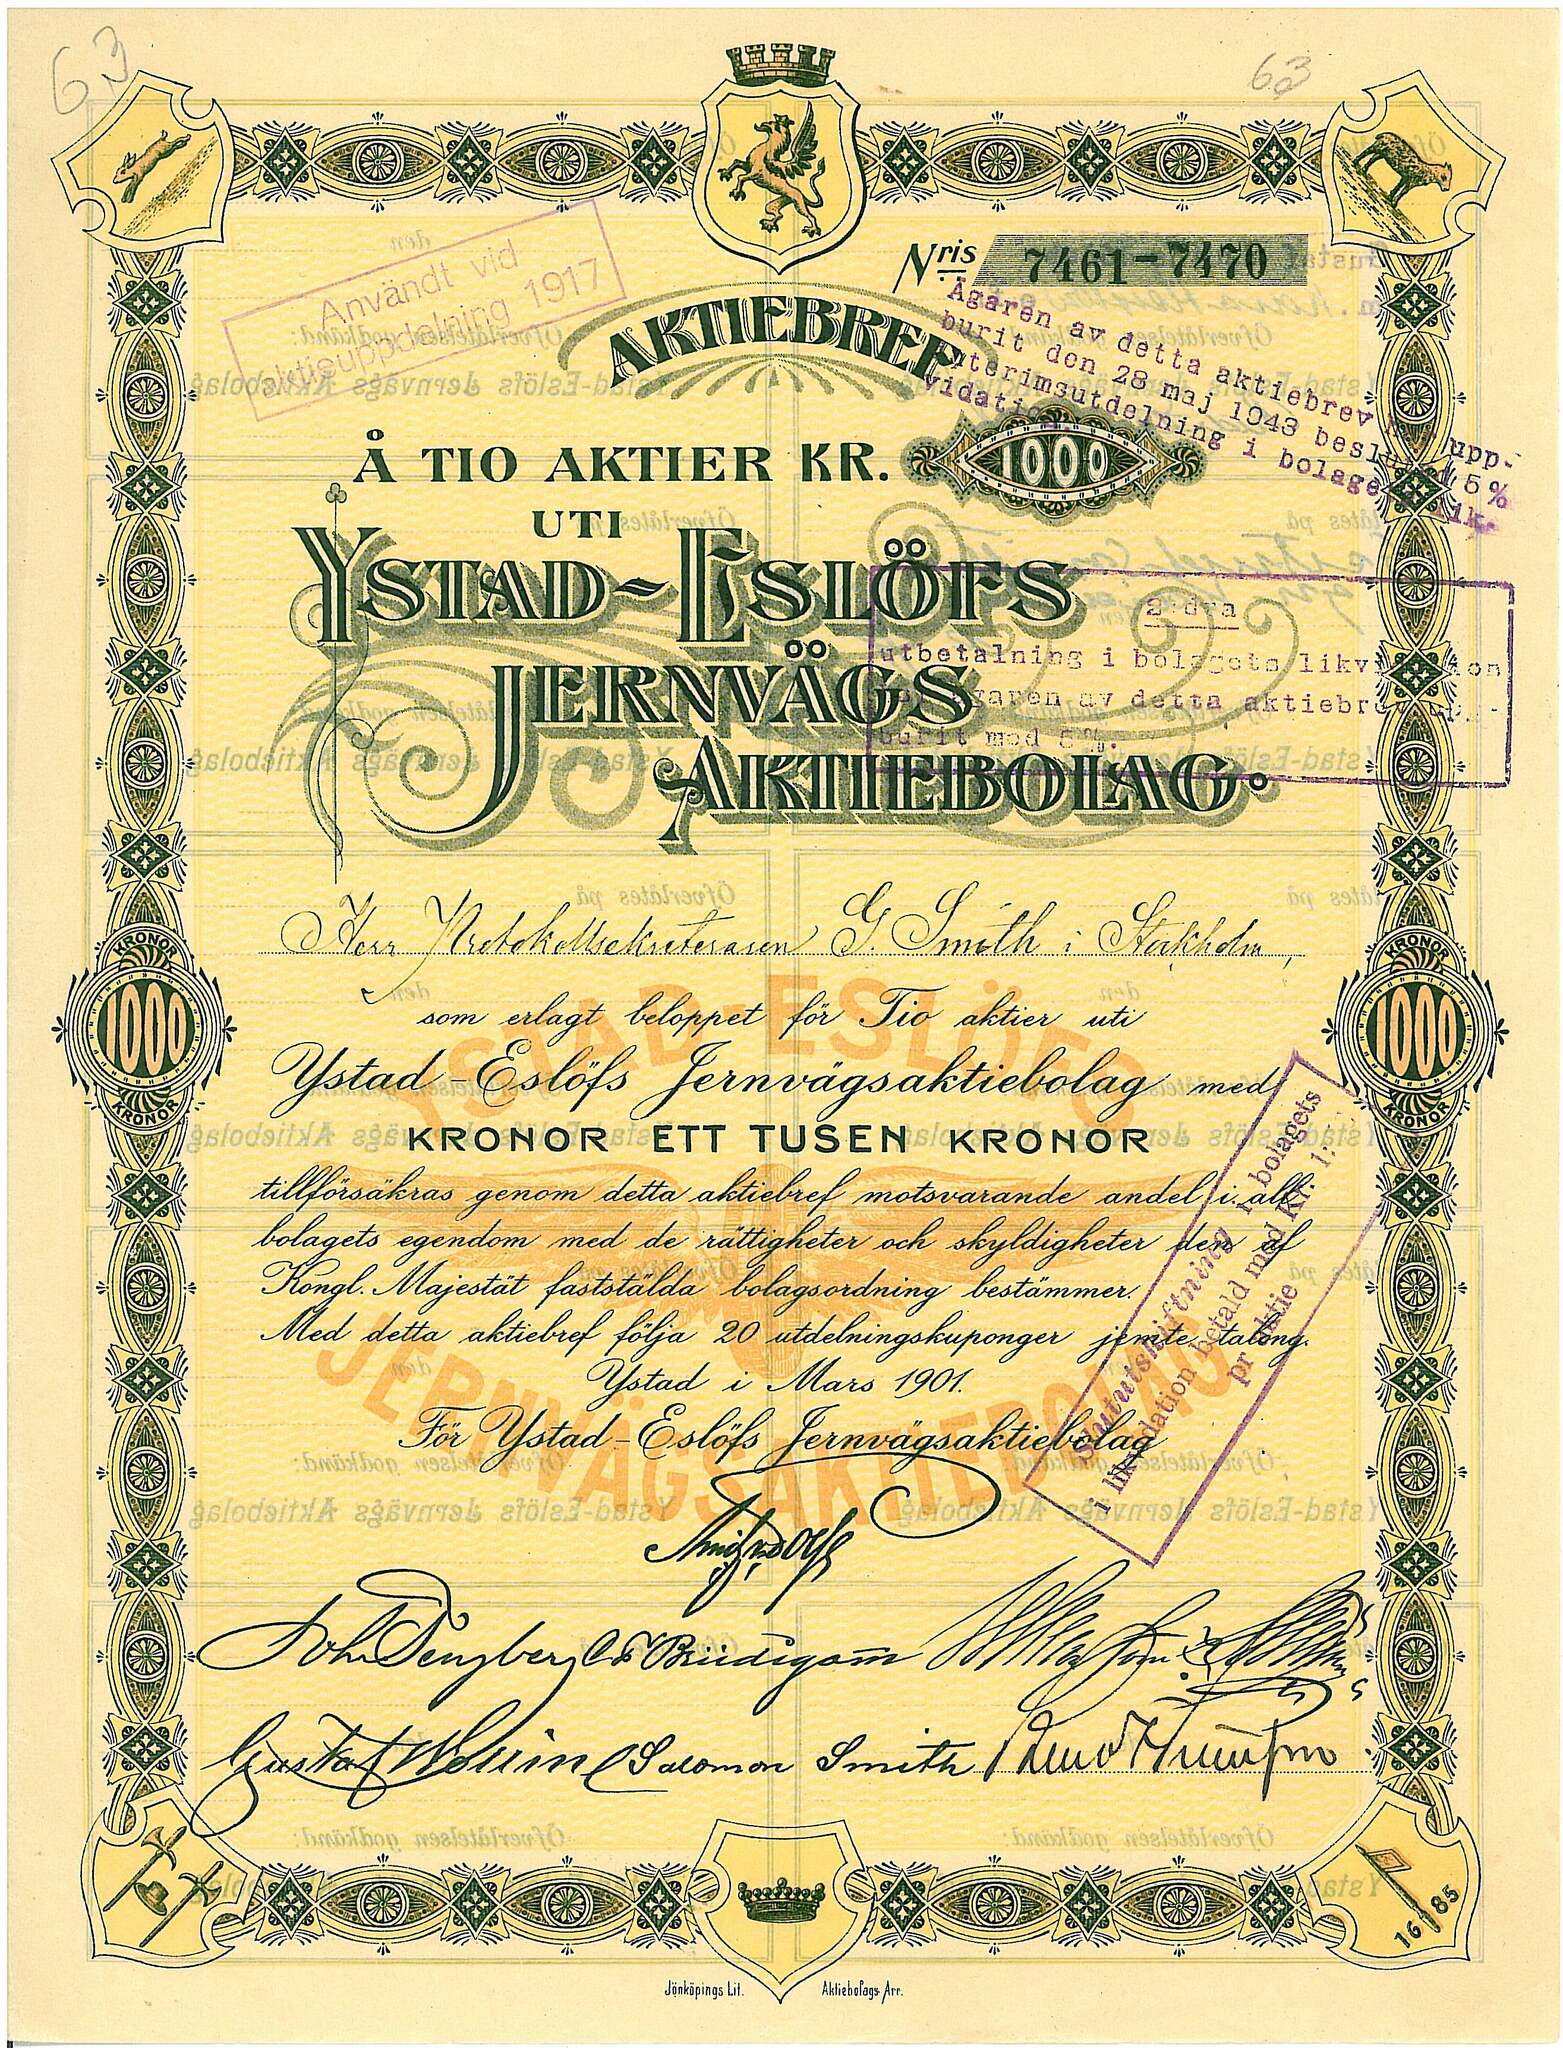 Ystad-Eslöfs Jernvägs AB, 1 000 kr, 1901